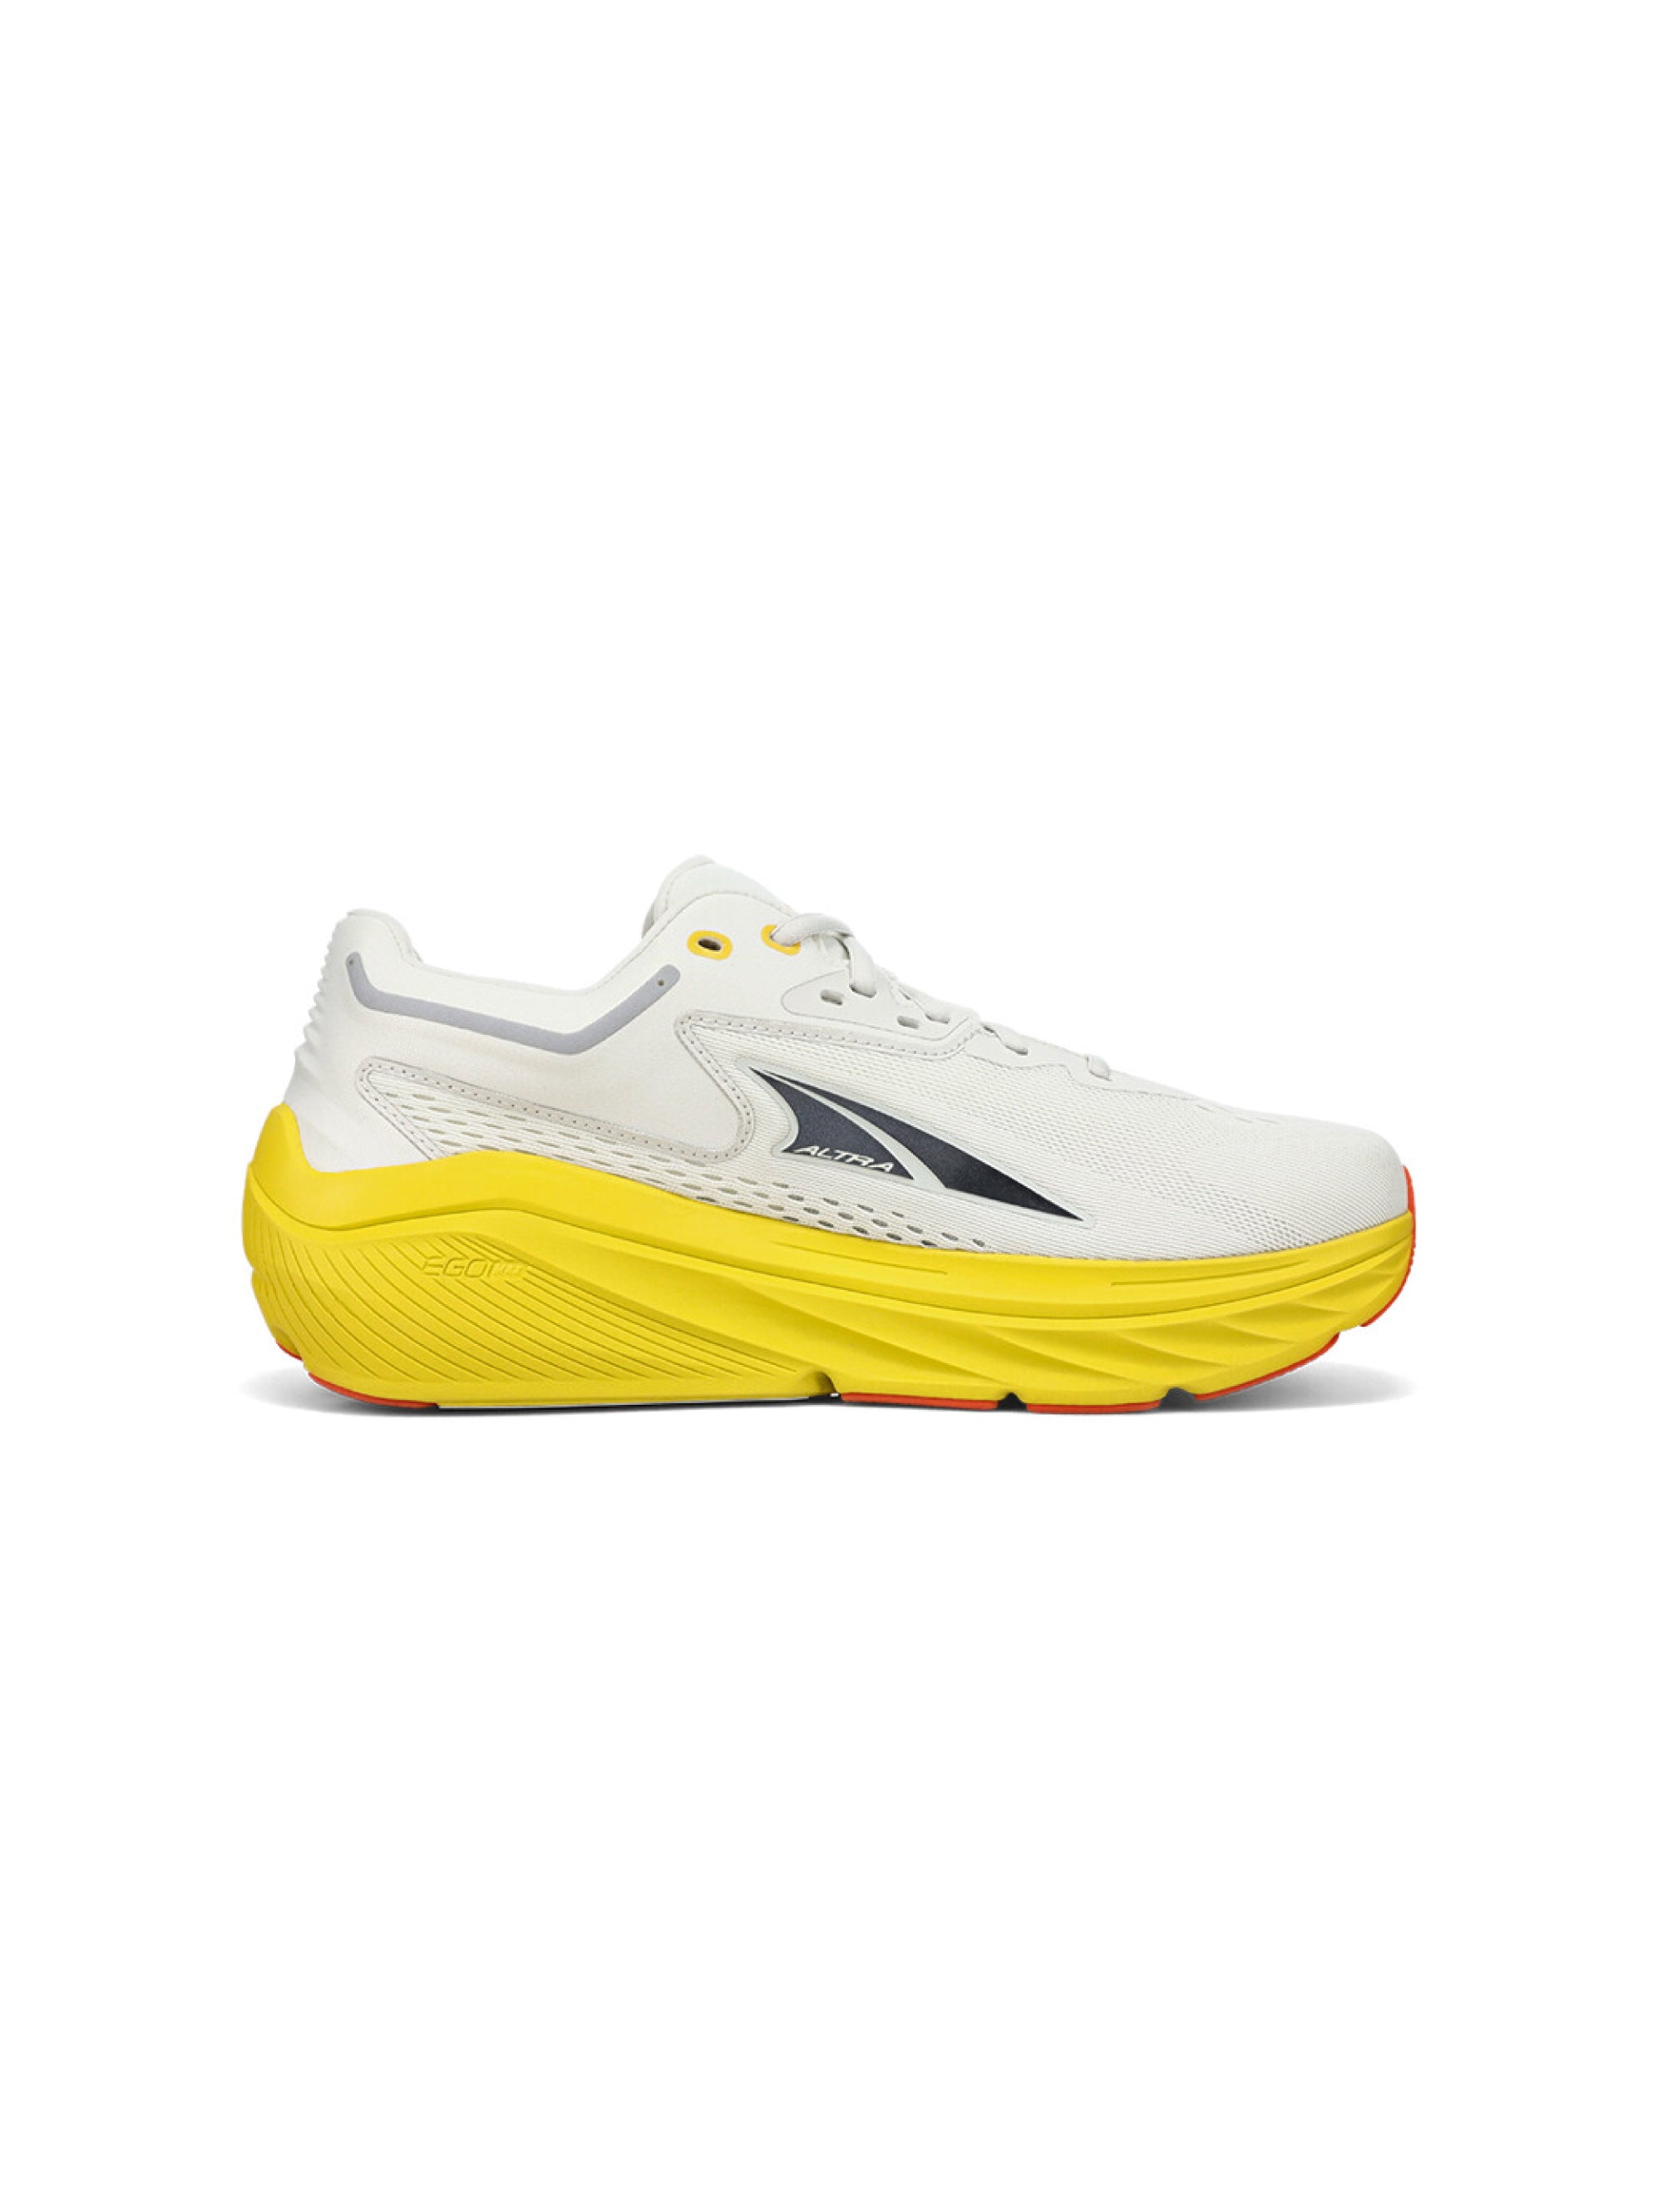 Via Olympus Yellow/Grey Running Sneakers